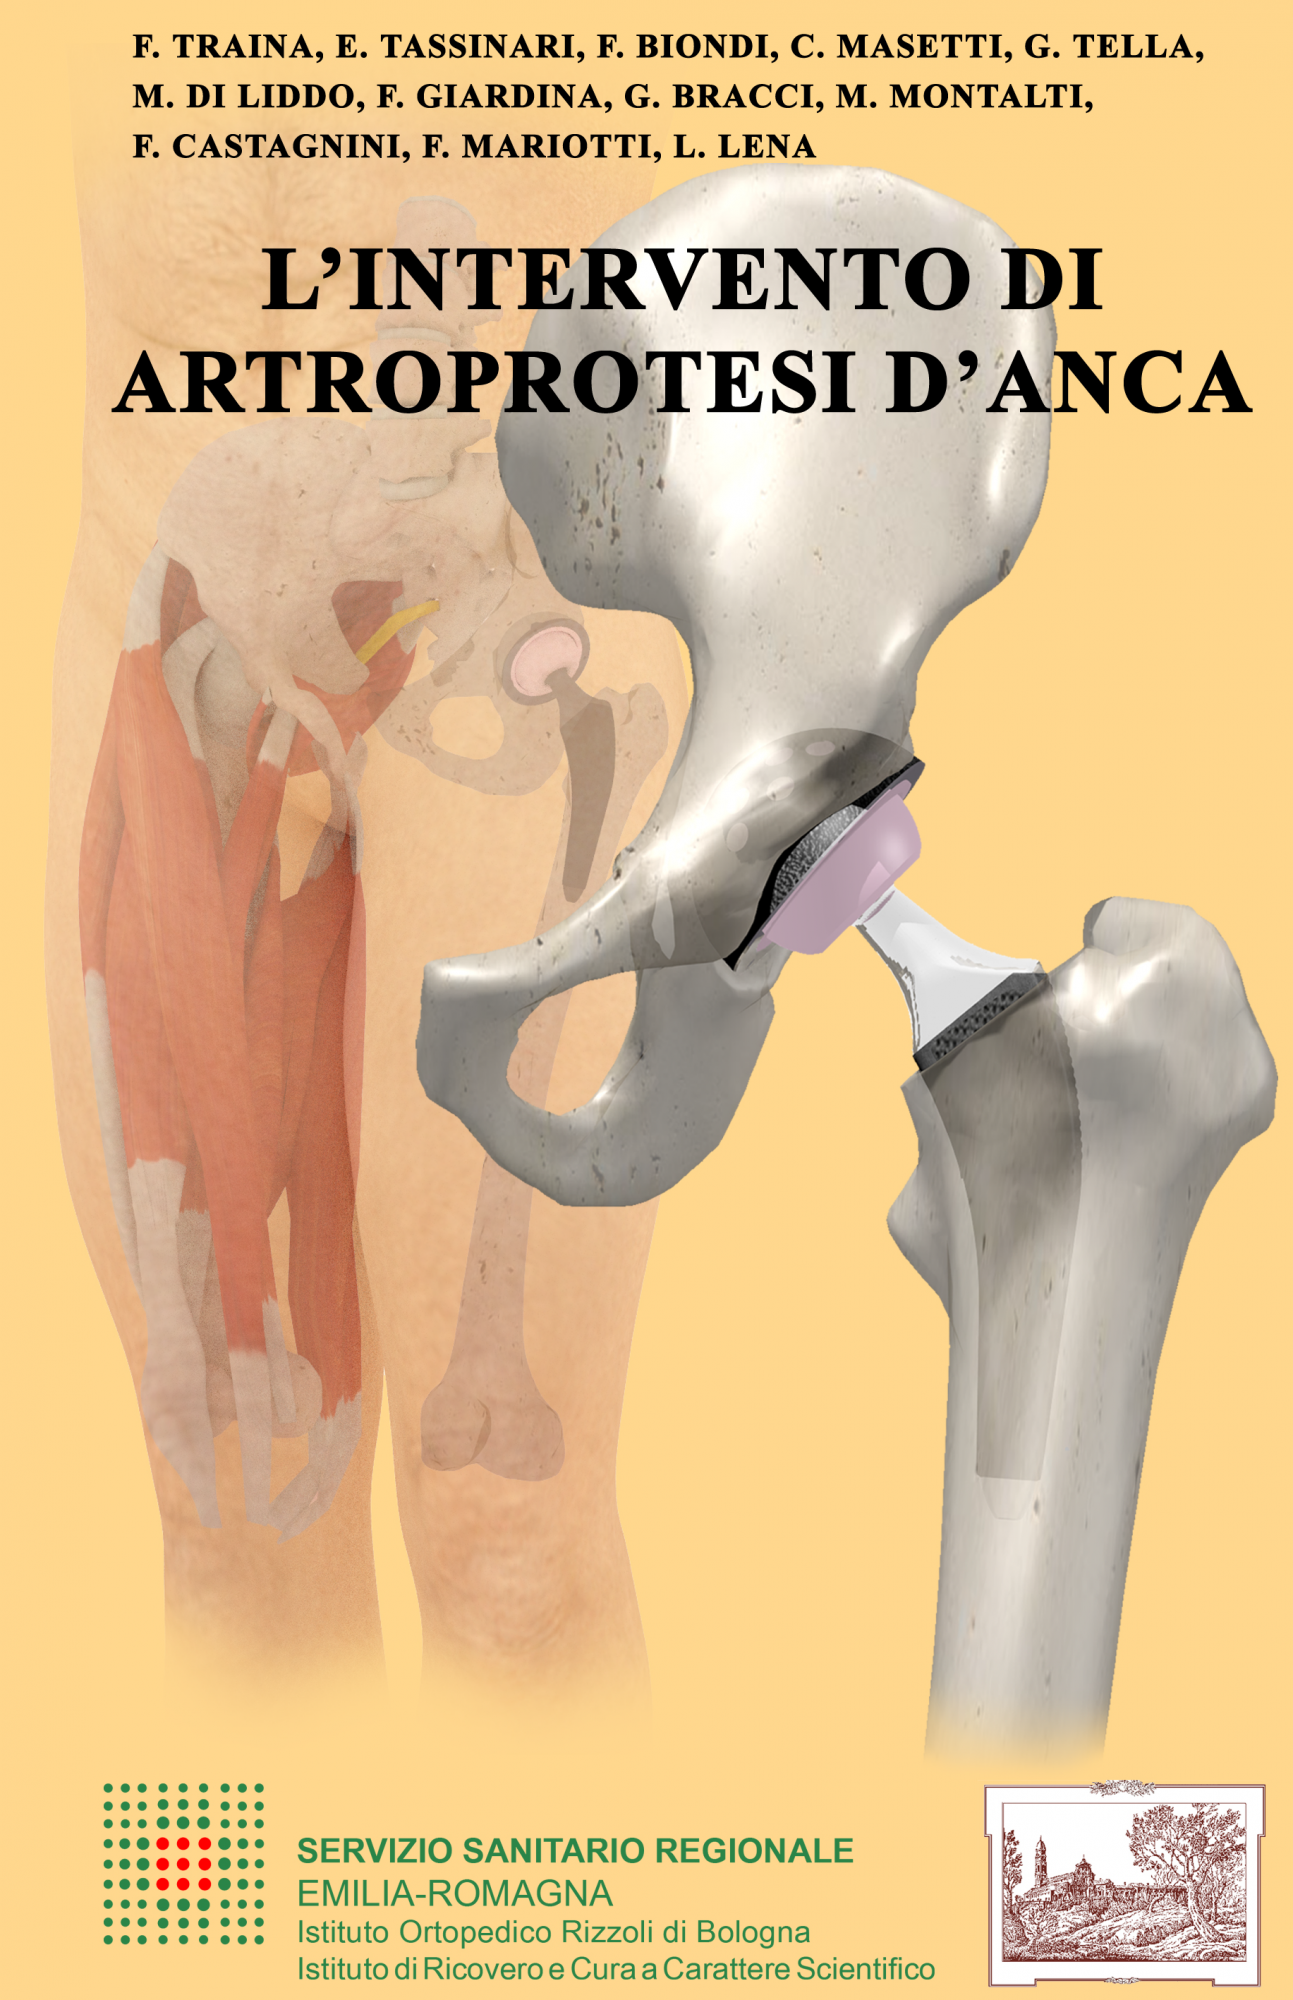 Artroprotesi d'anca